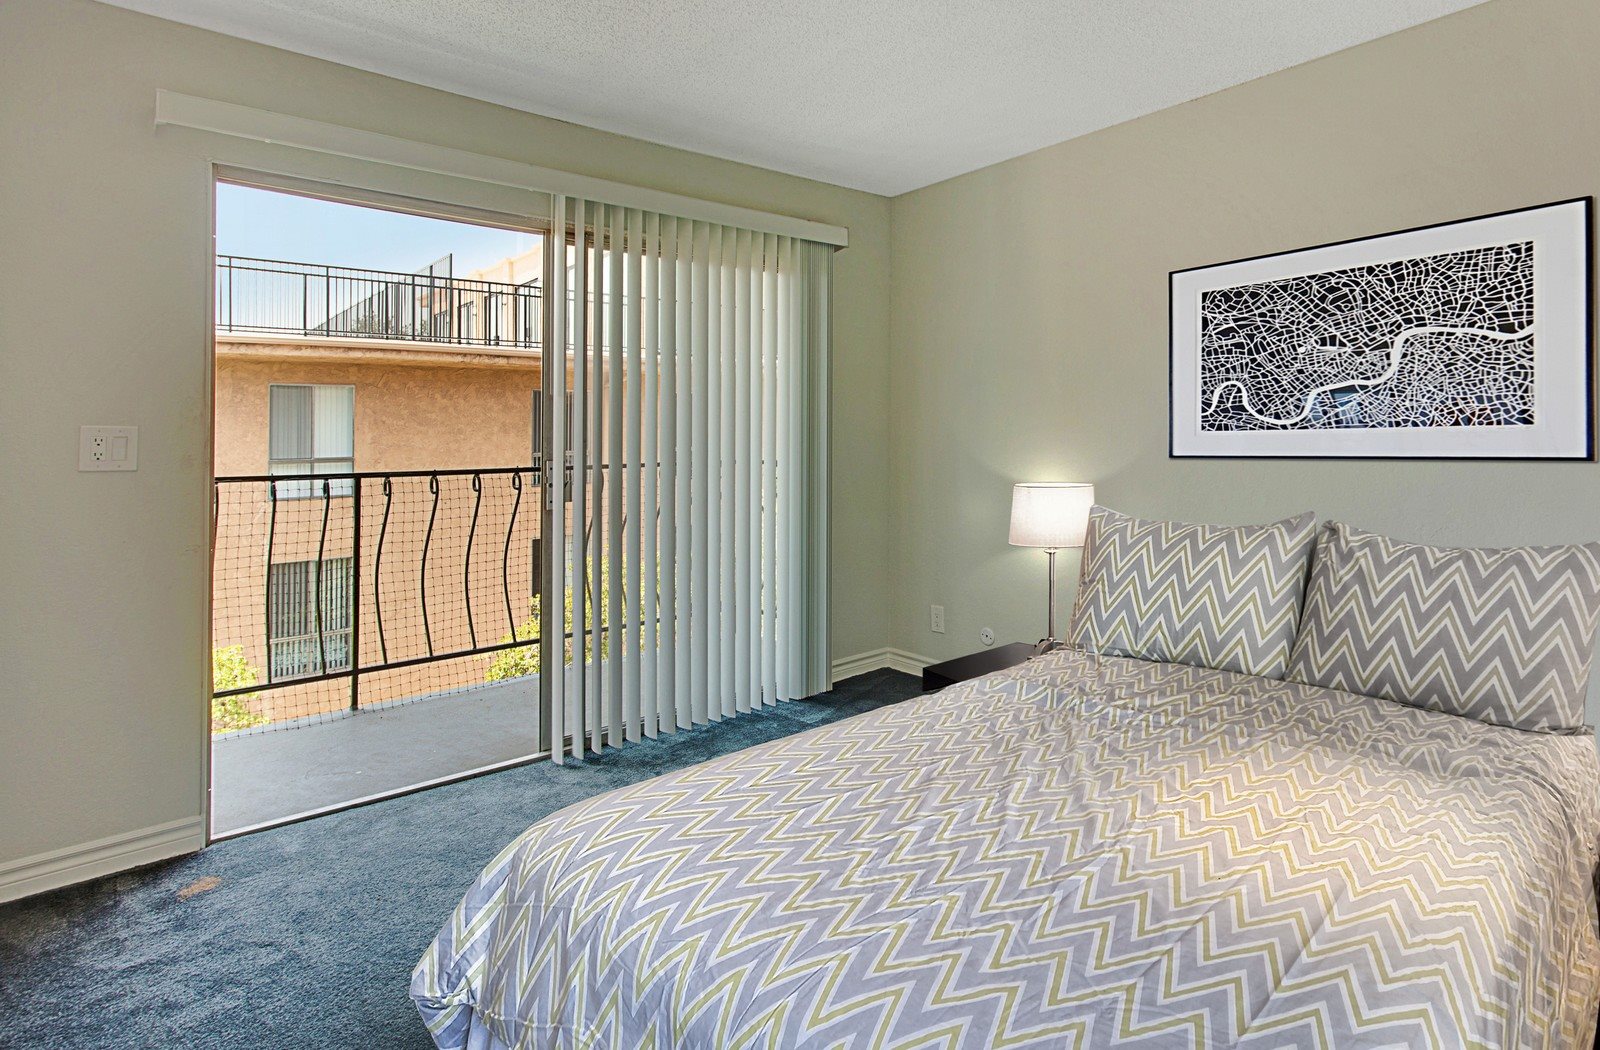 1 Bedroom Apartments In Los Angeles Under 600